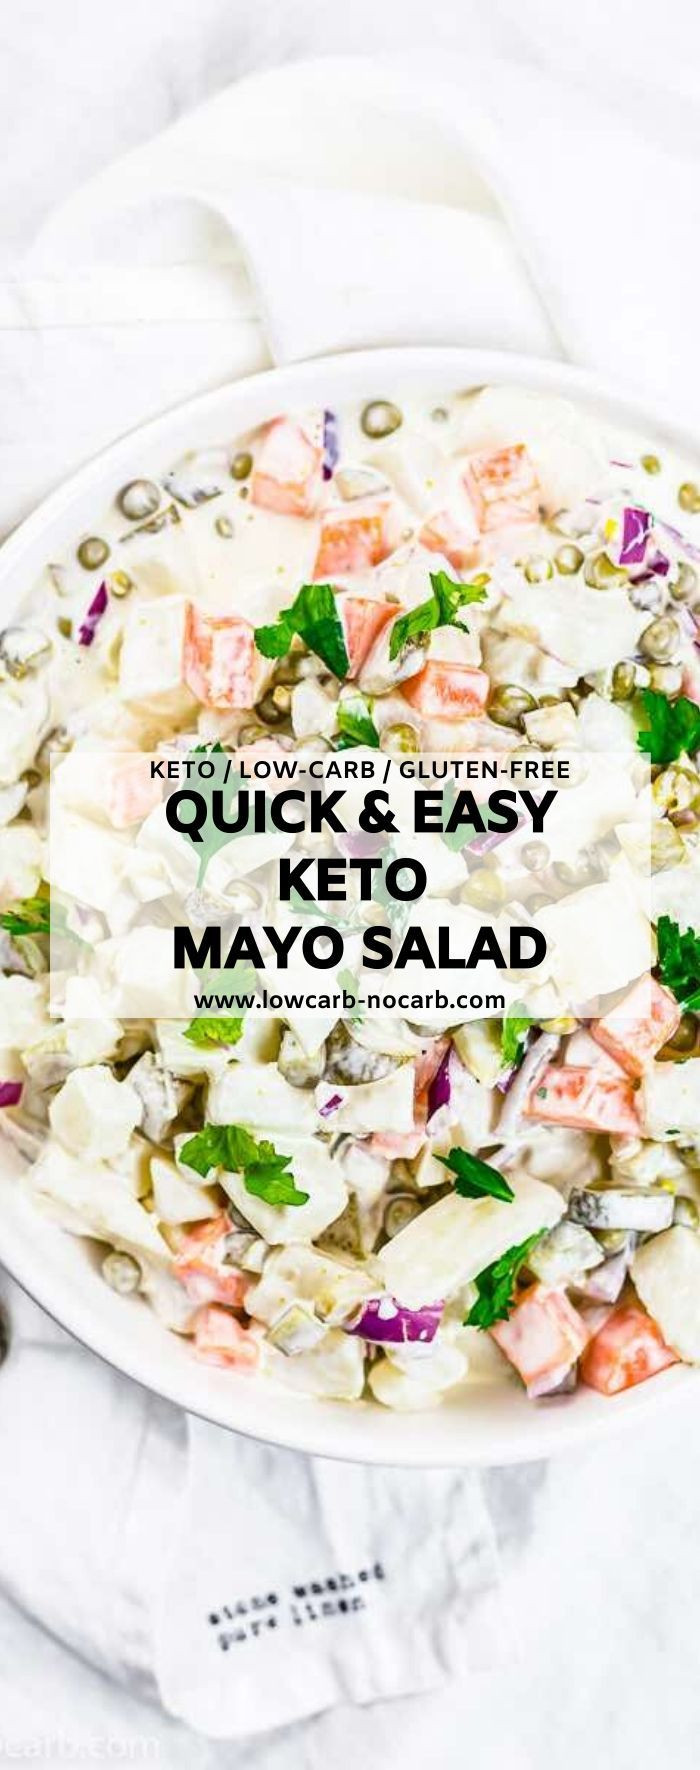 Clean Keto Recipes For Beginners
 Easy “Potato” Keto Salad Recipe in 2020